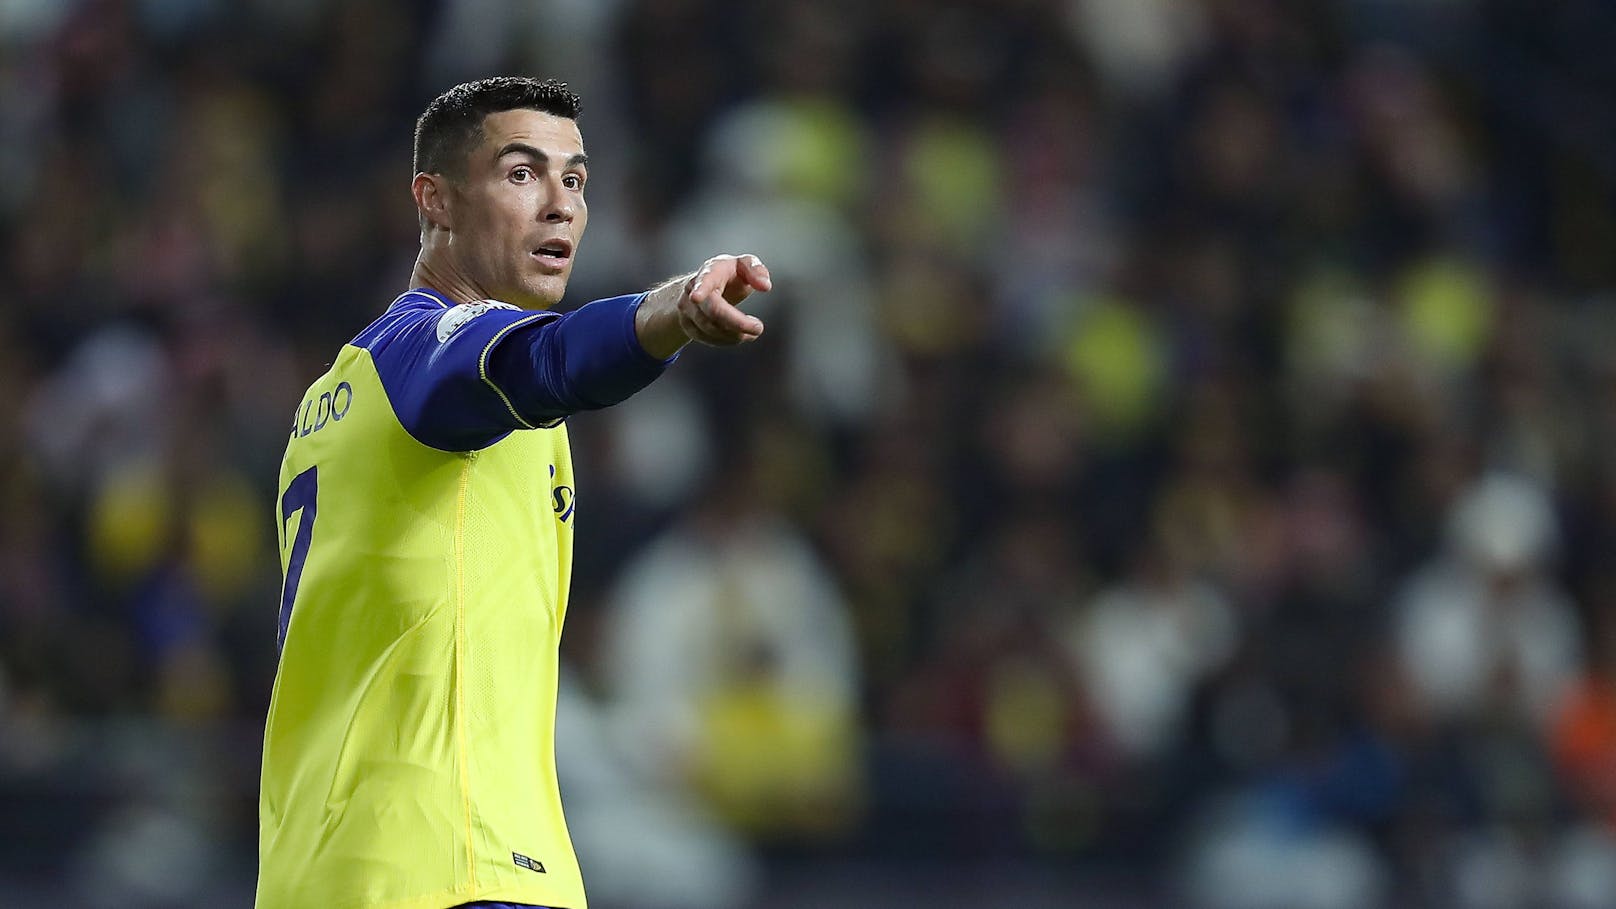 Fußball-Star Cristiano Ronaldo könnte monatelang gesperrt werden. 